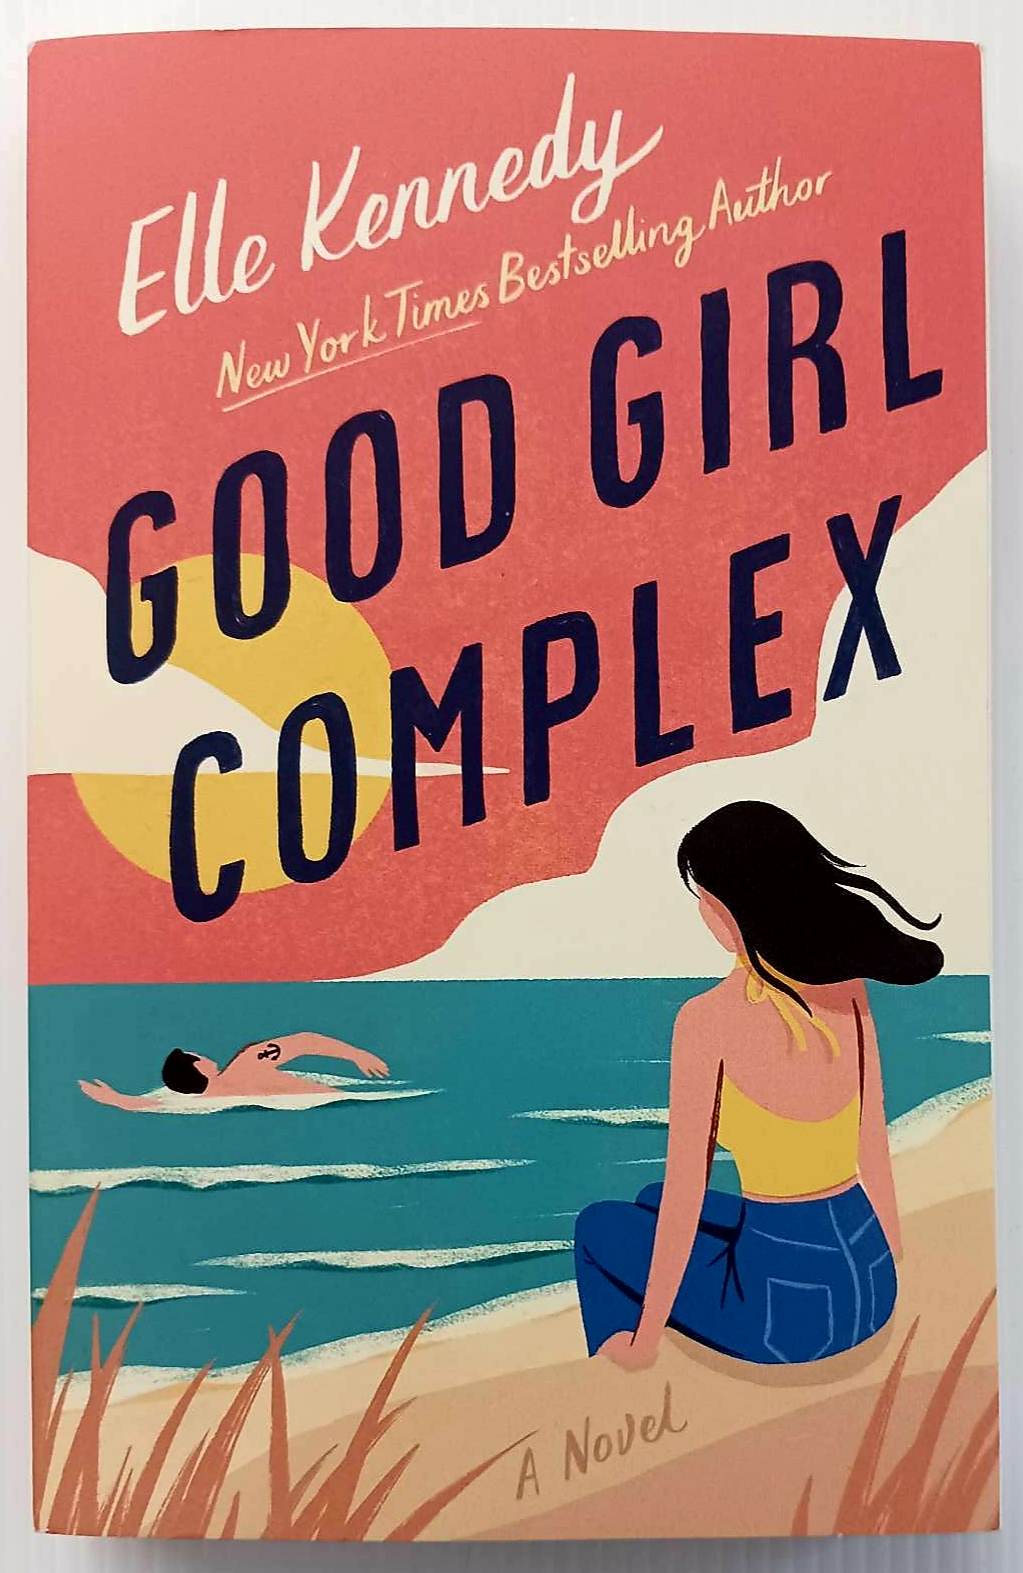 GOOD GIRL COMPLEX - Elle Kennedy